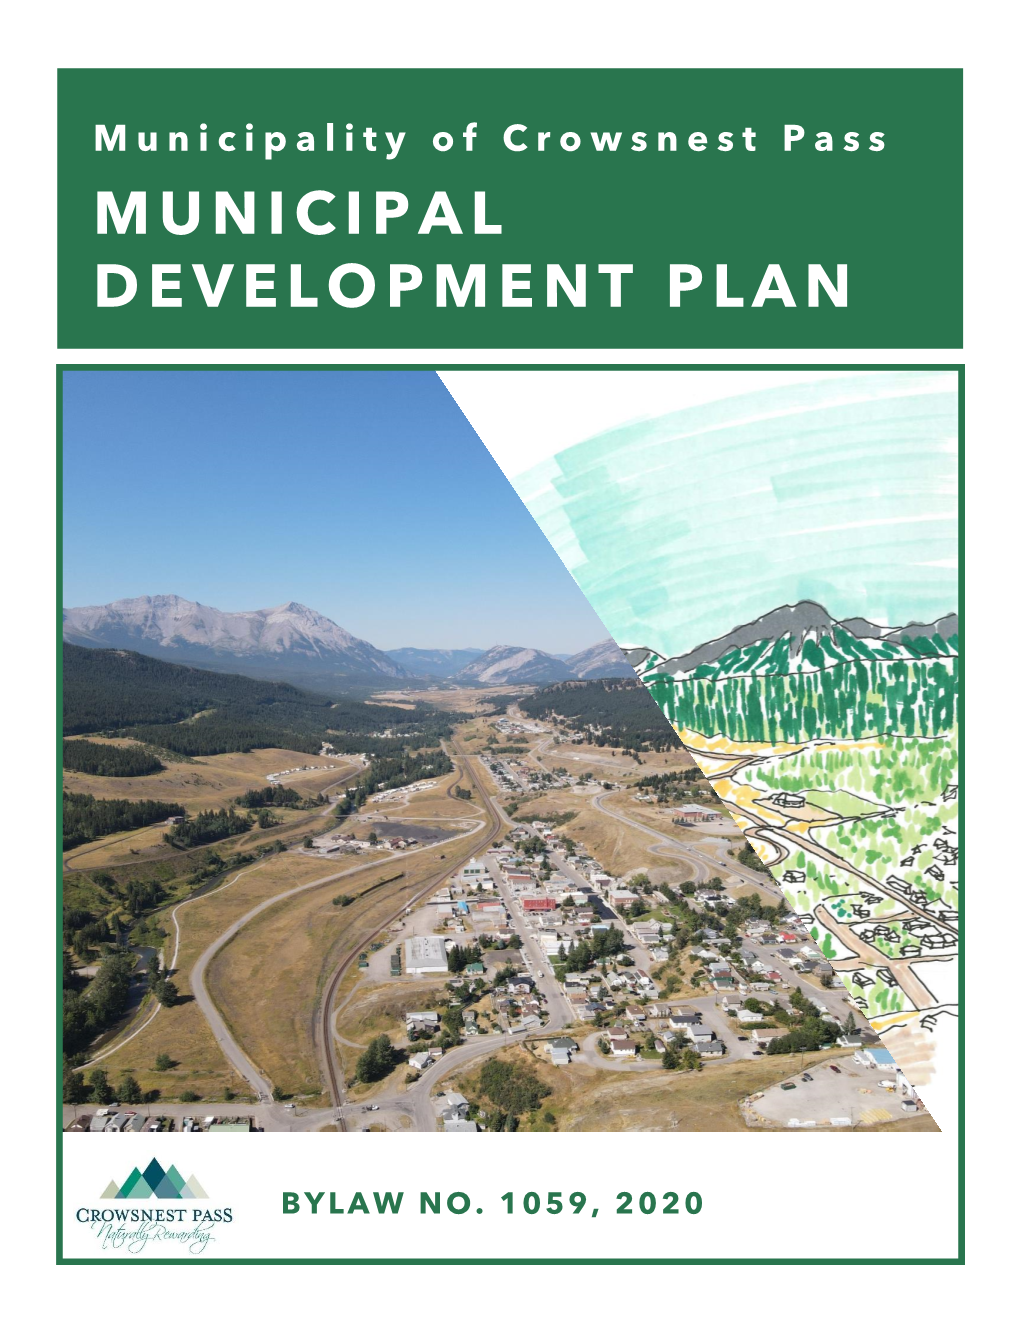 Crowsnest Pass Municipal Development Plan Bylaw 1059